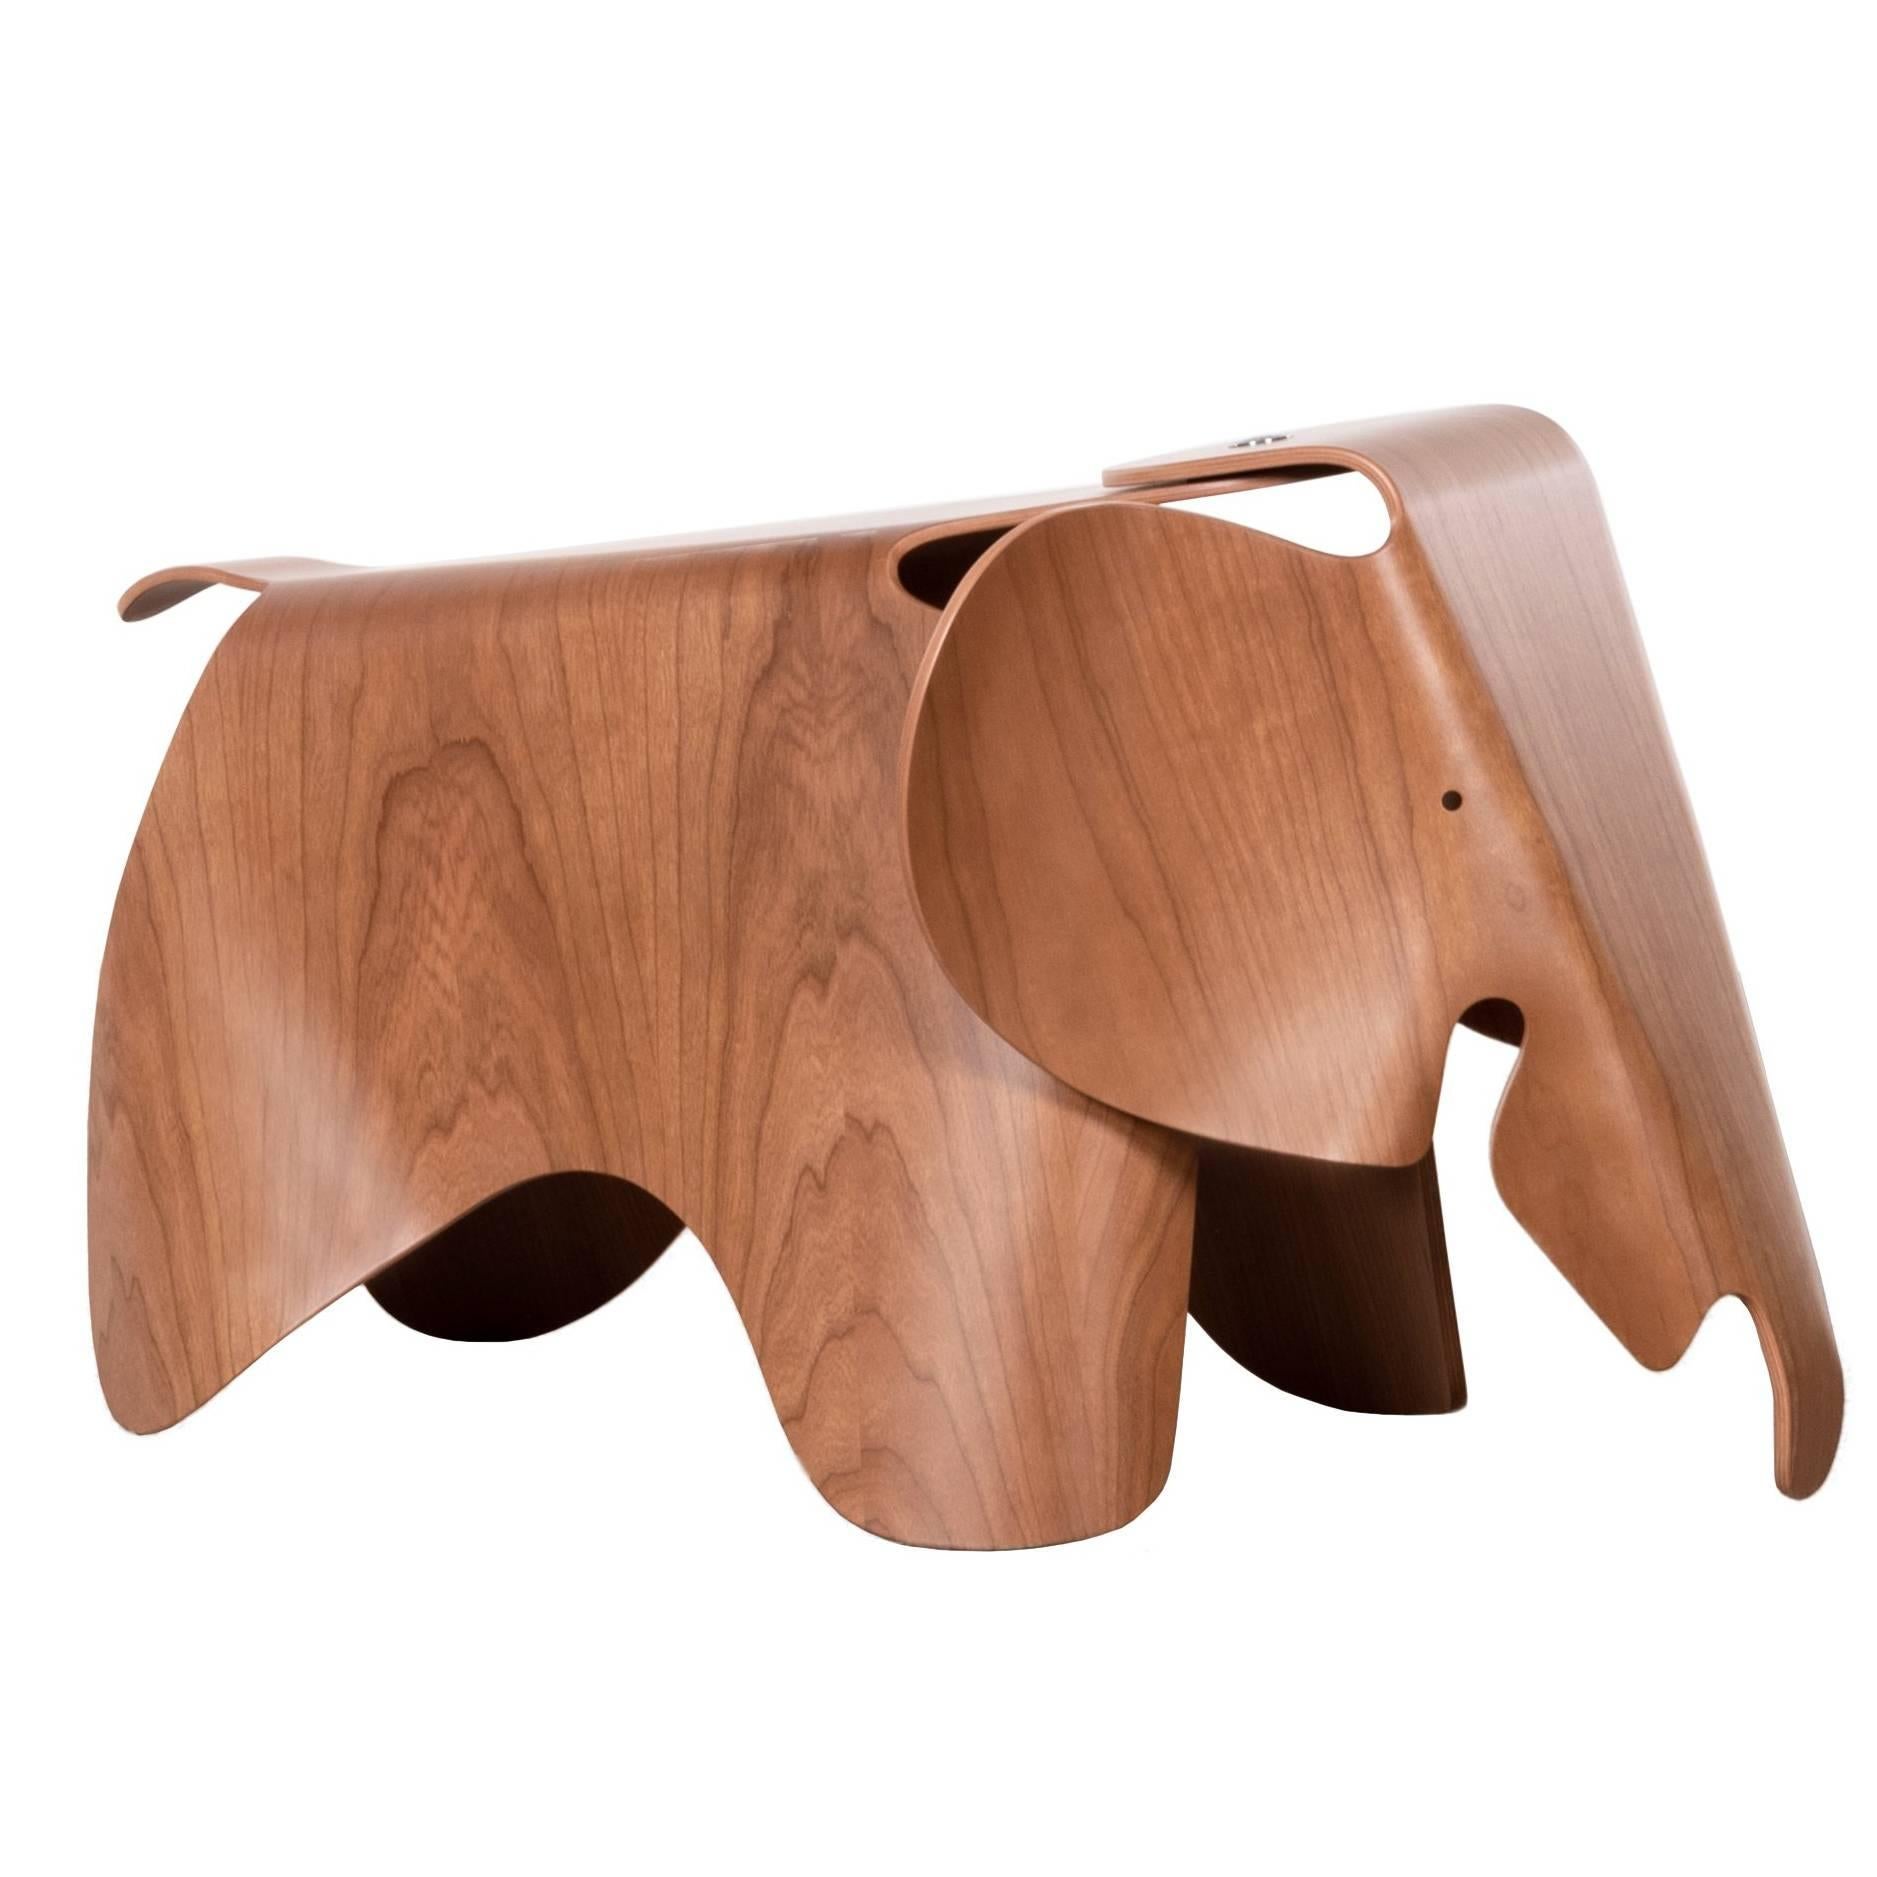 Eames Cherry Plywood Elephant by Vitra